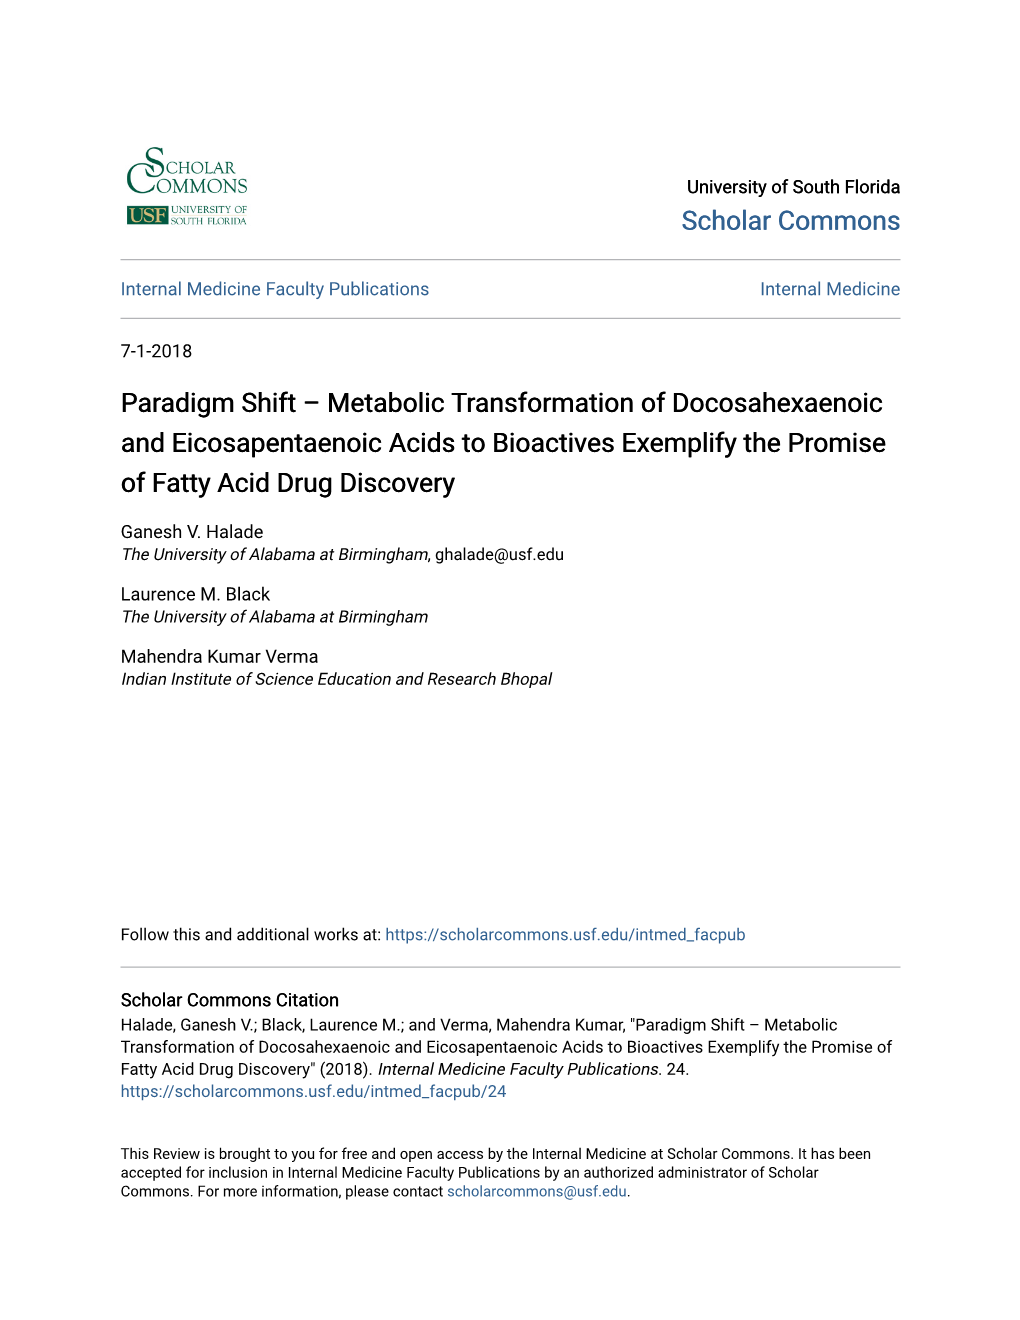 Paradigm Shift – Metabolic Transformation of Docosahexaenoic and Eicosapentaenoic Acids to Bioactives Exemplify the Promise of Fatty Acid Drug Discovery